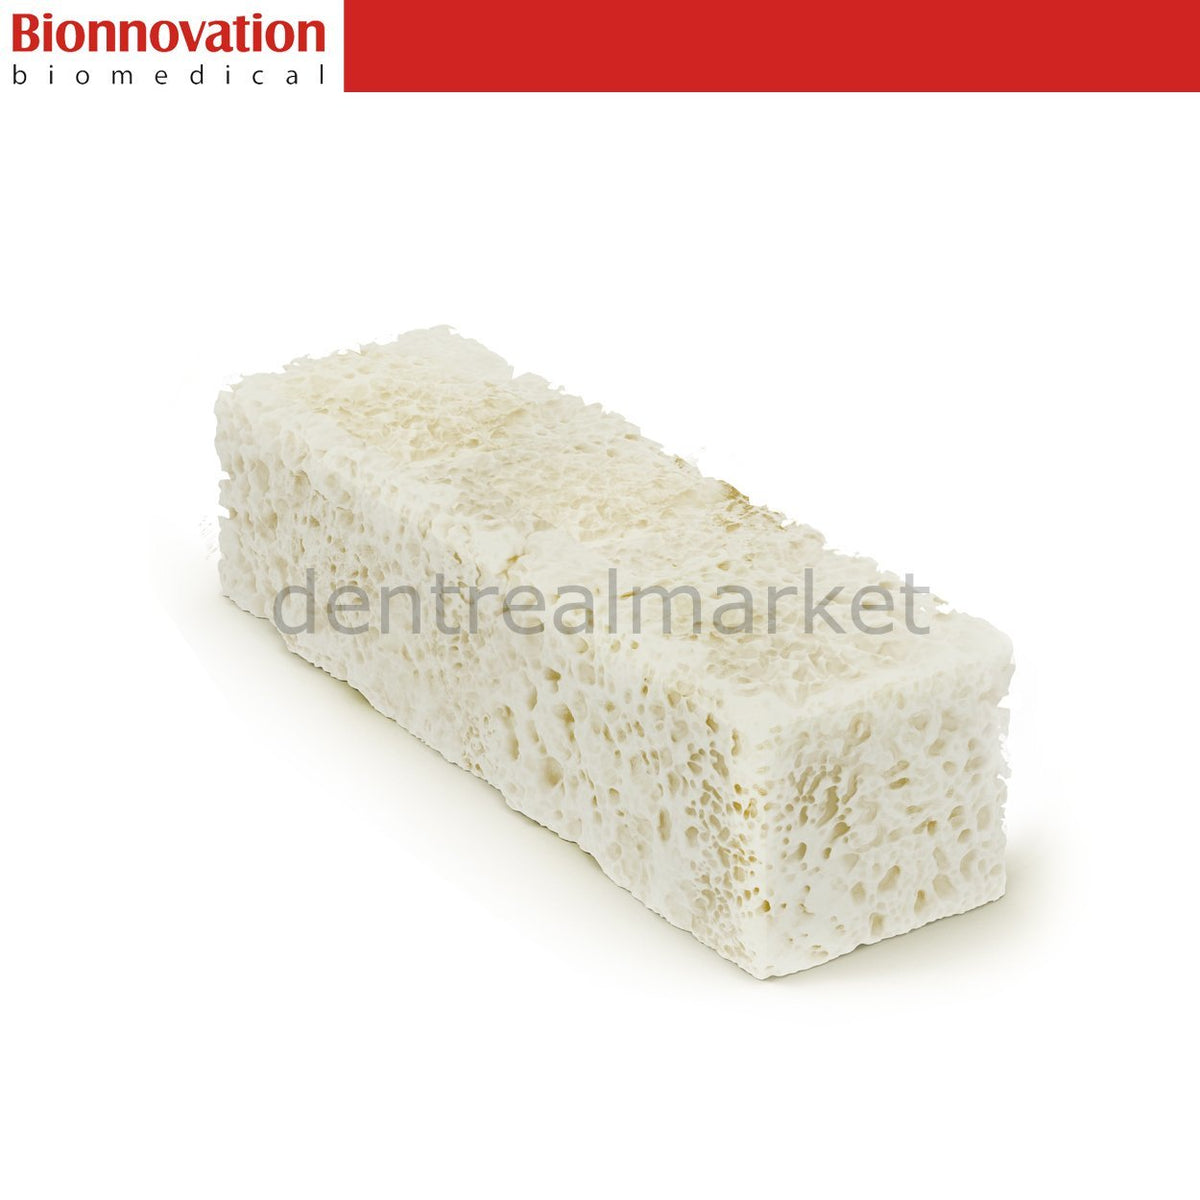 DentrealStore - Bionnovation Bonefill Block Bovine XenoGraft - Block Dental Graft -10*10*40 mm